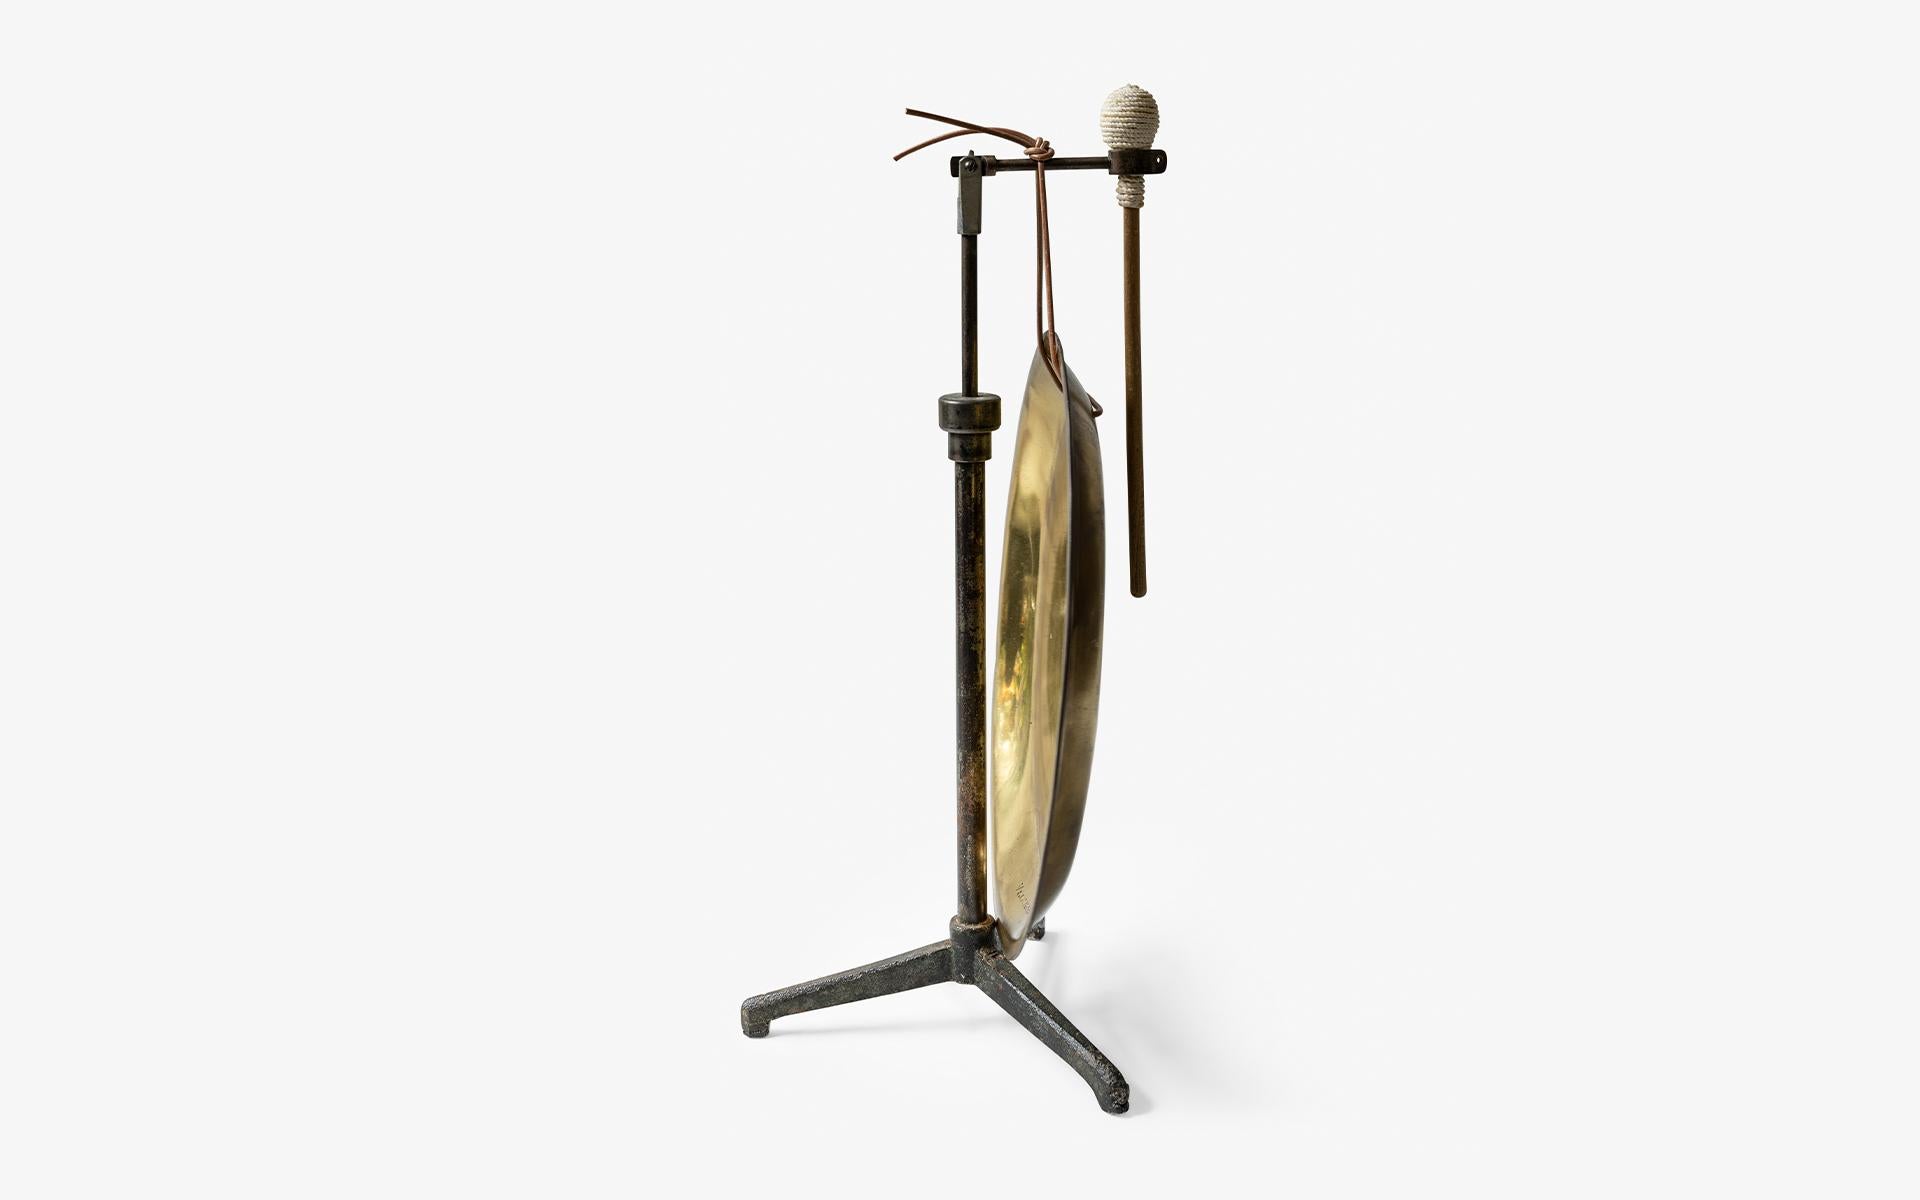 Turkish Iron Hanging Meditative Brass Gong Set For Sale